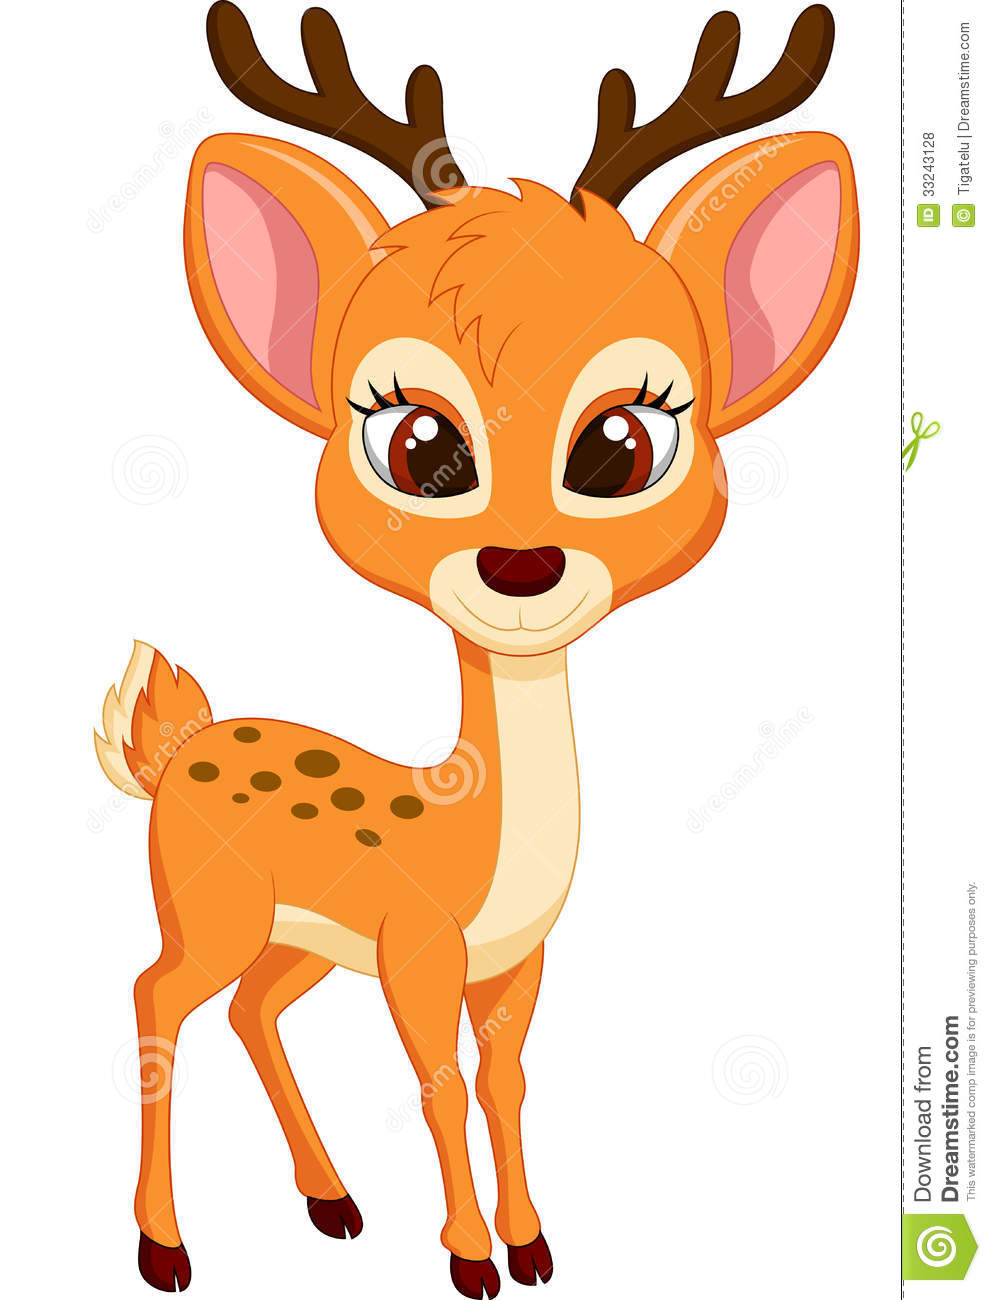 Cute Deer Cartoon Royalty Free Stock Photos   Image  33243128